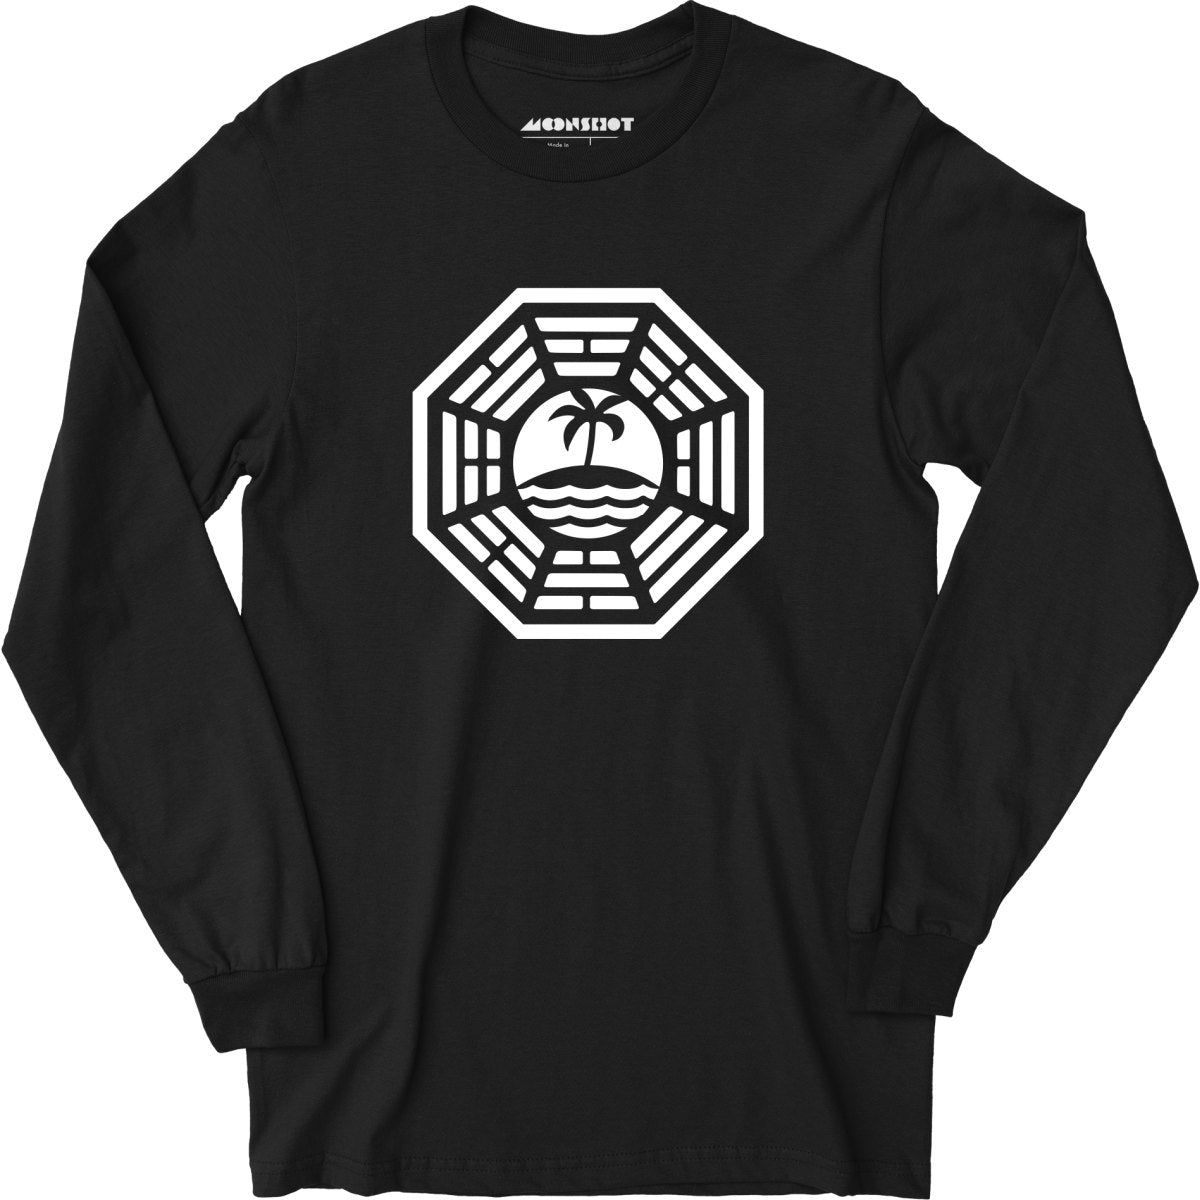 The Dharma Initiative - Long Sleeve T-Shirt